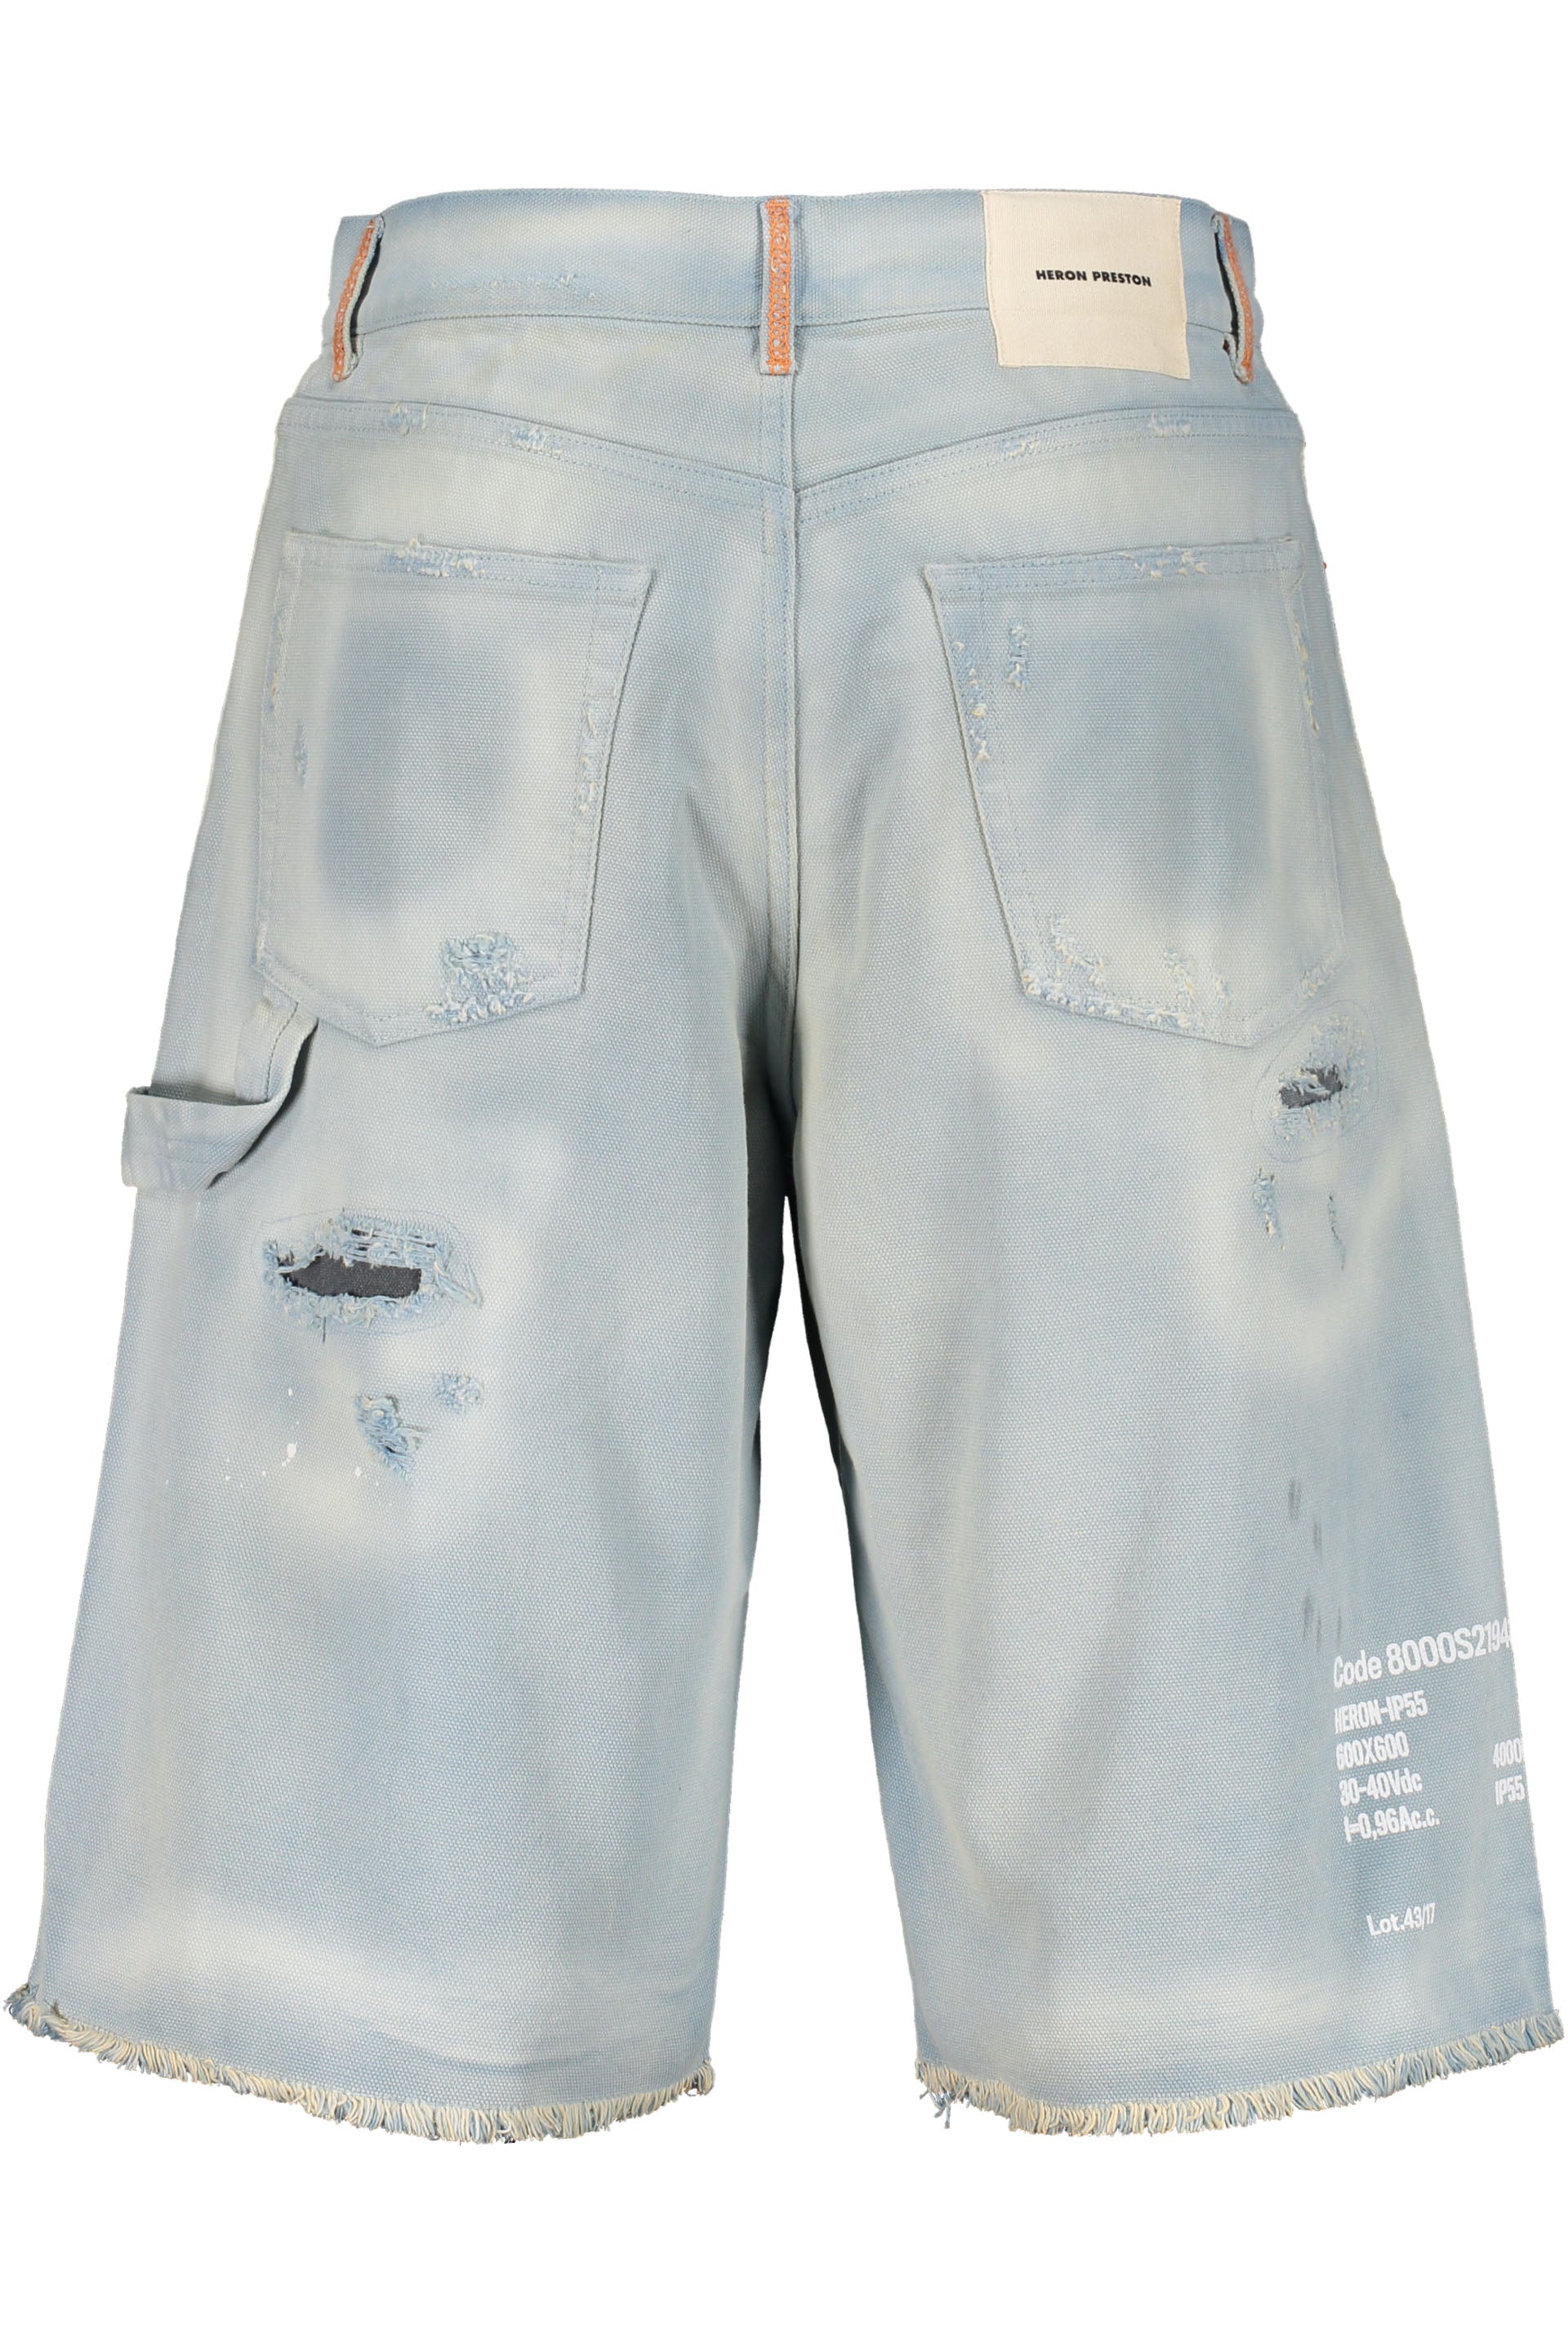 Denim shorts-Bekleidung Short-Heron Preston-OUTLET-SALE-ARCHIVIST